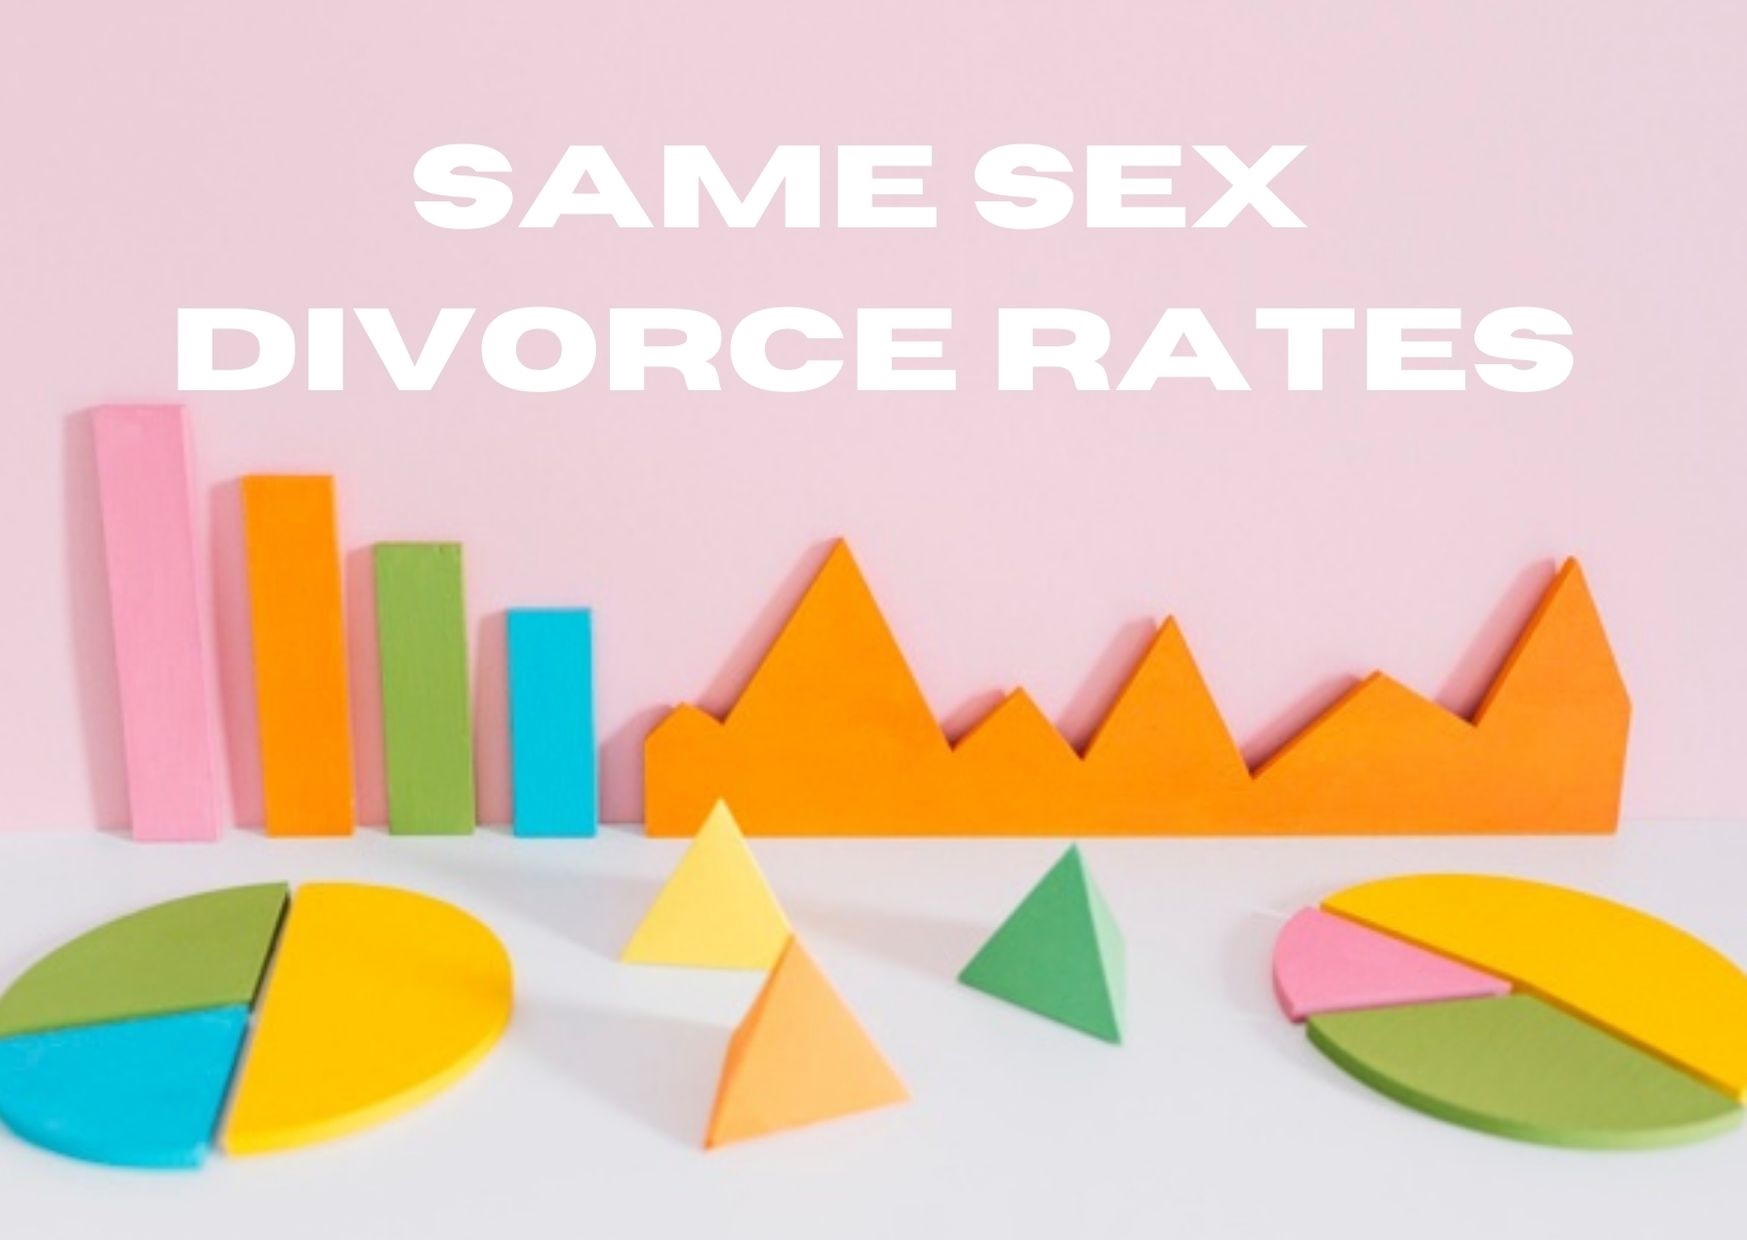 arranged marriages divorce rate reddit